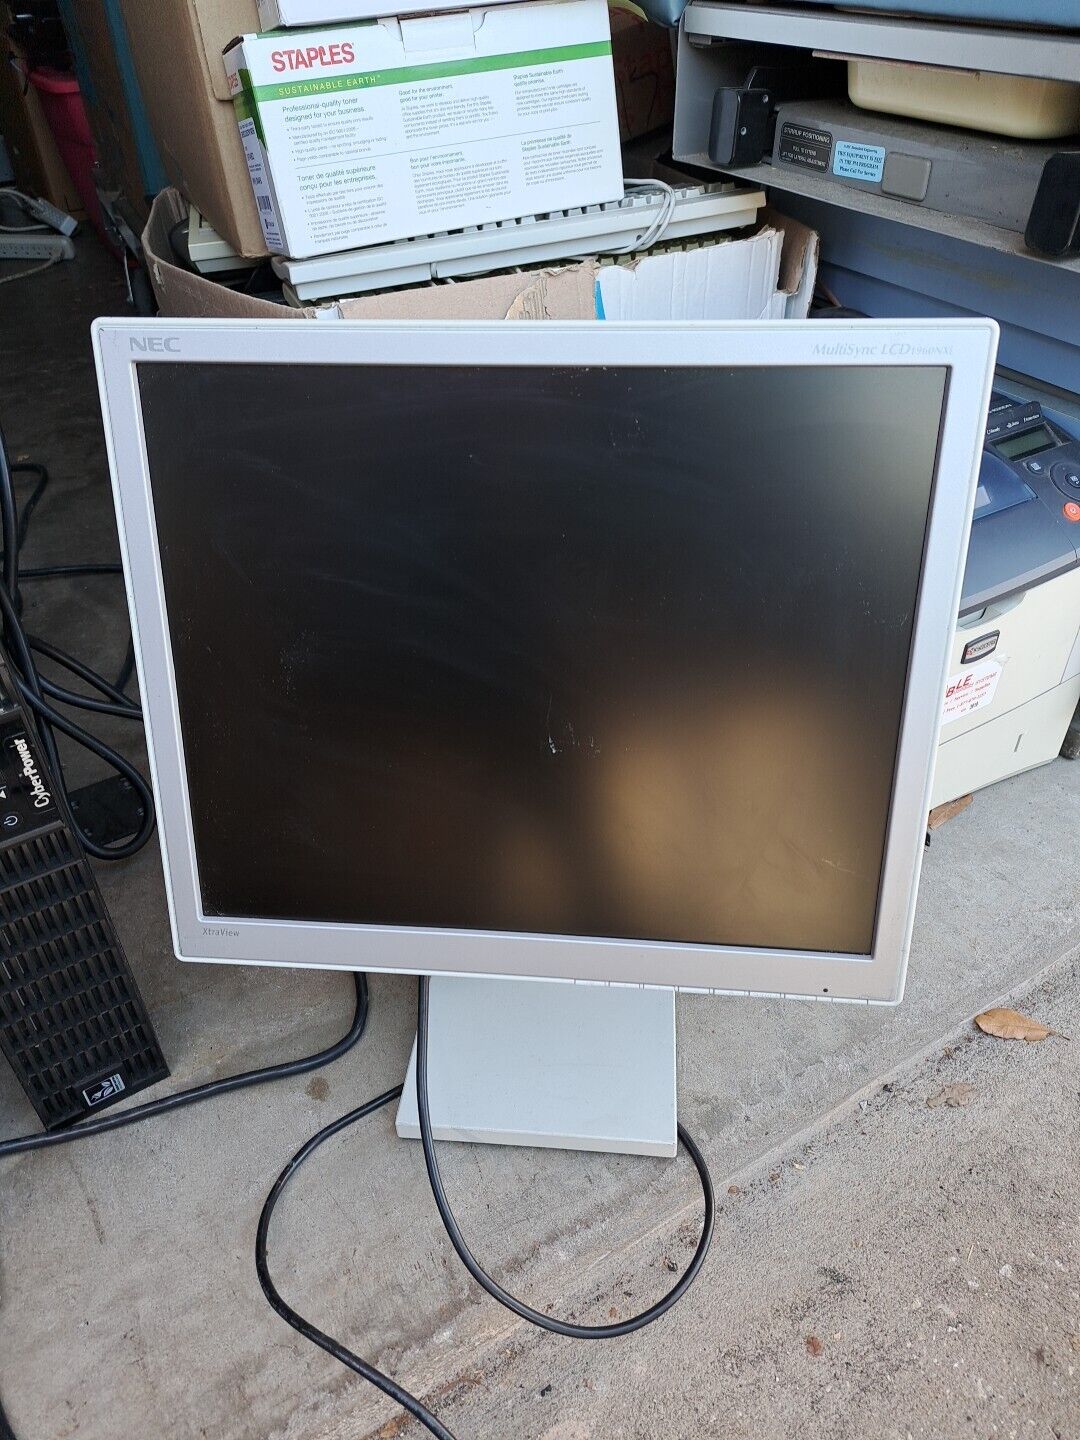 NEC Multisync LCD1960NXi  19-inch Desktop Monitor.  DO NOT POWER ON.